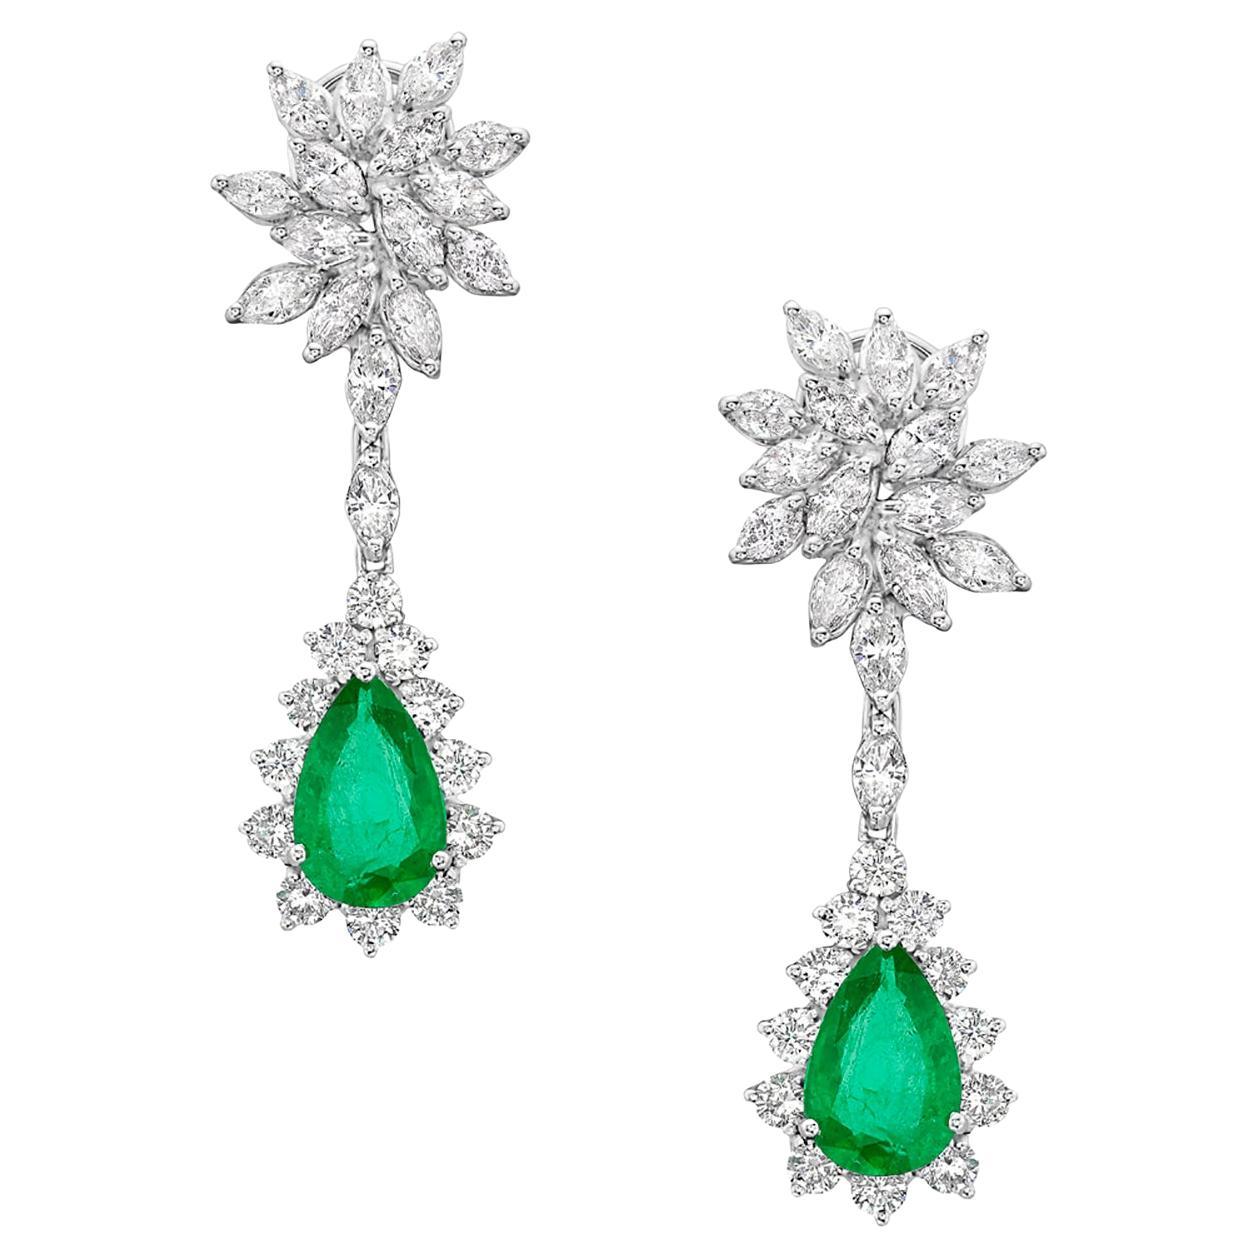 Starburst Earrings with Pear Shaped Emerald & VS Diamonds in 18k White Gold